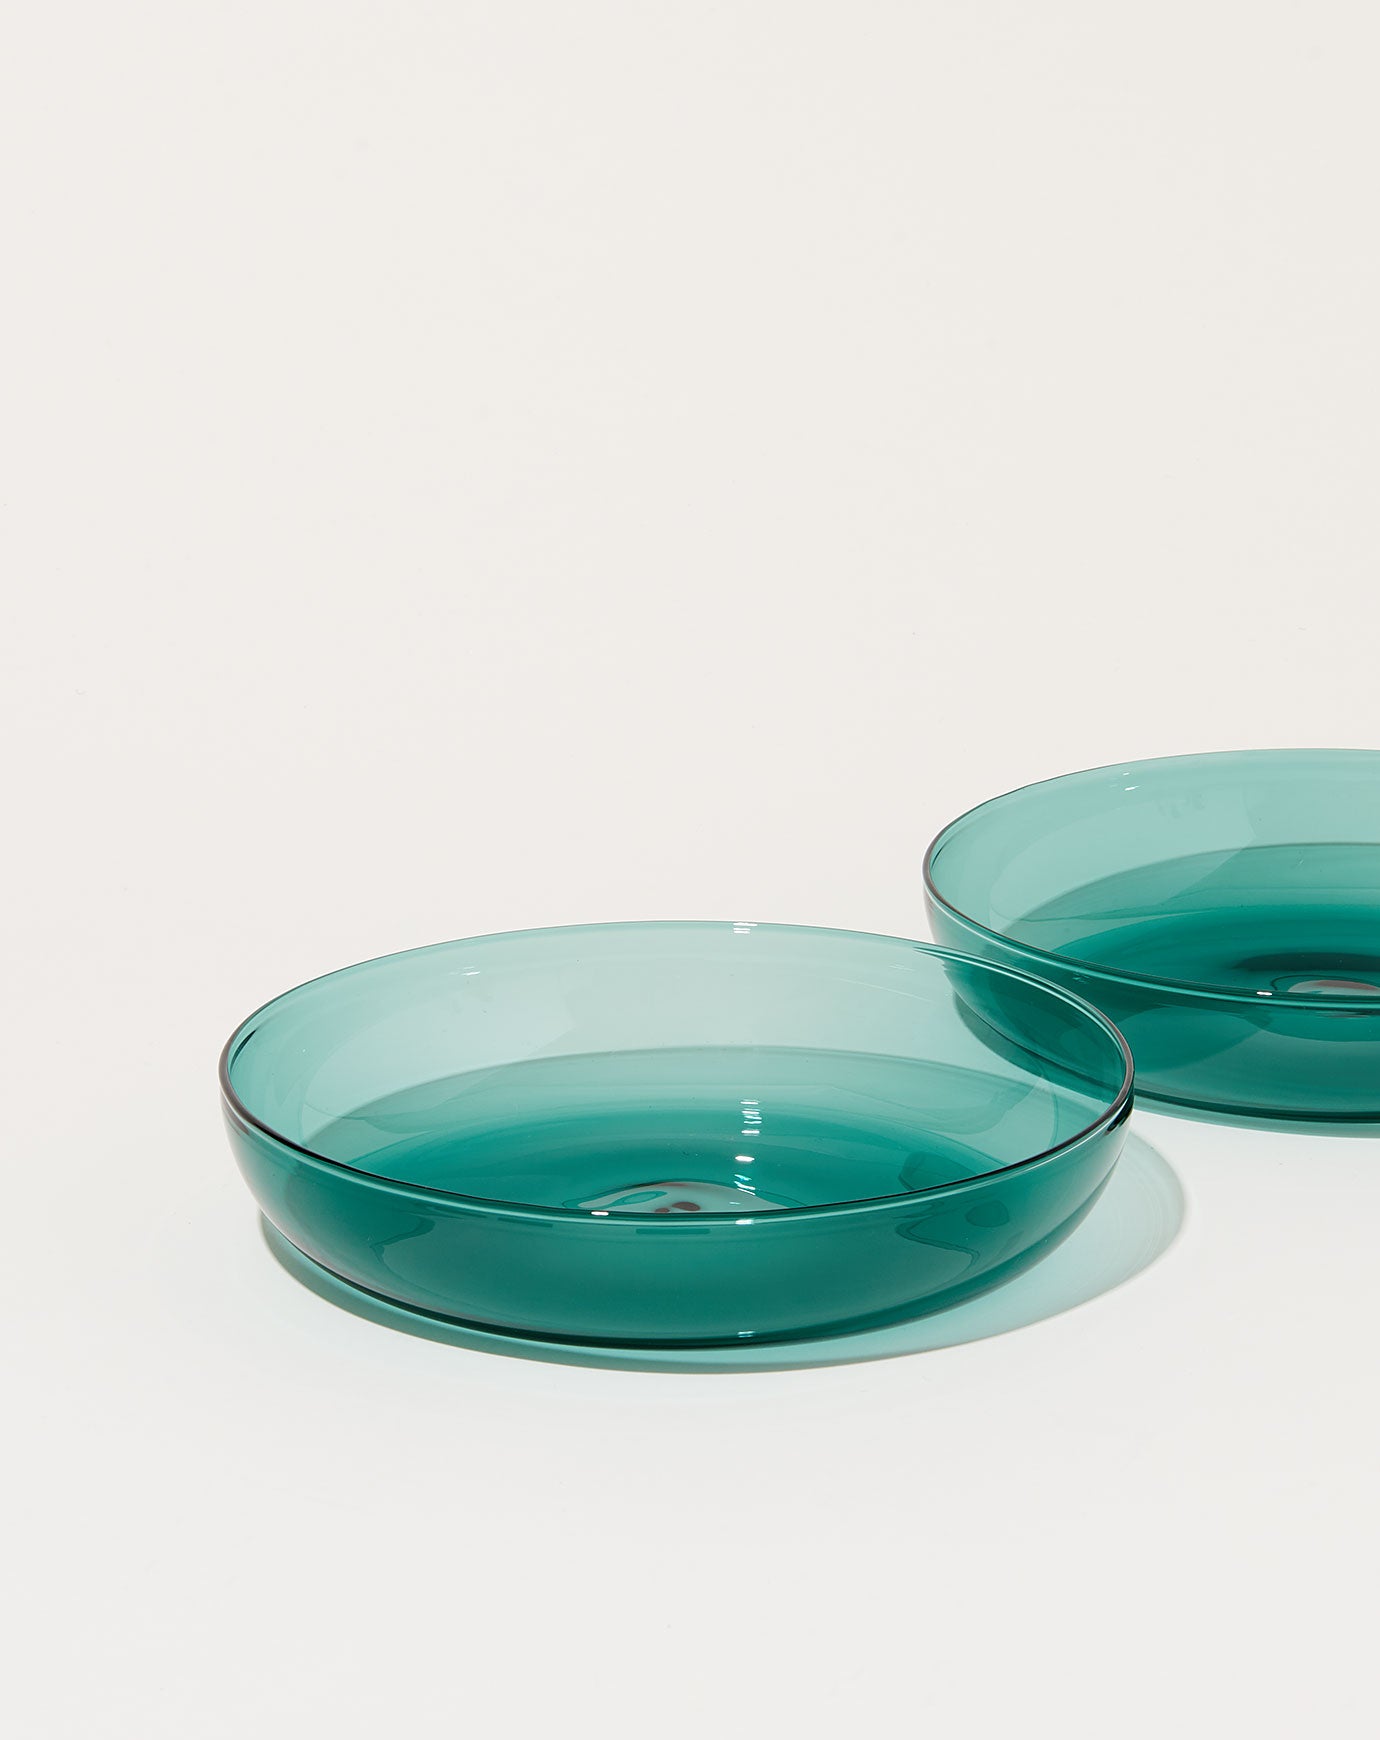 Maison Balzac Set of 2 Glass Plates in Teal